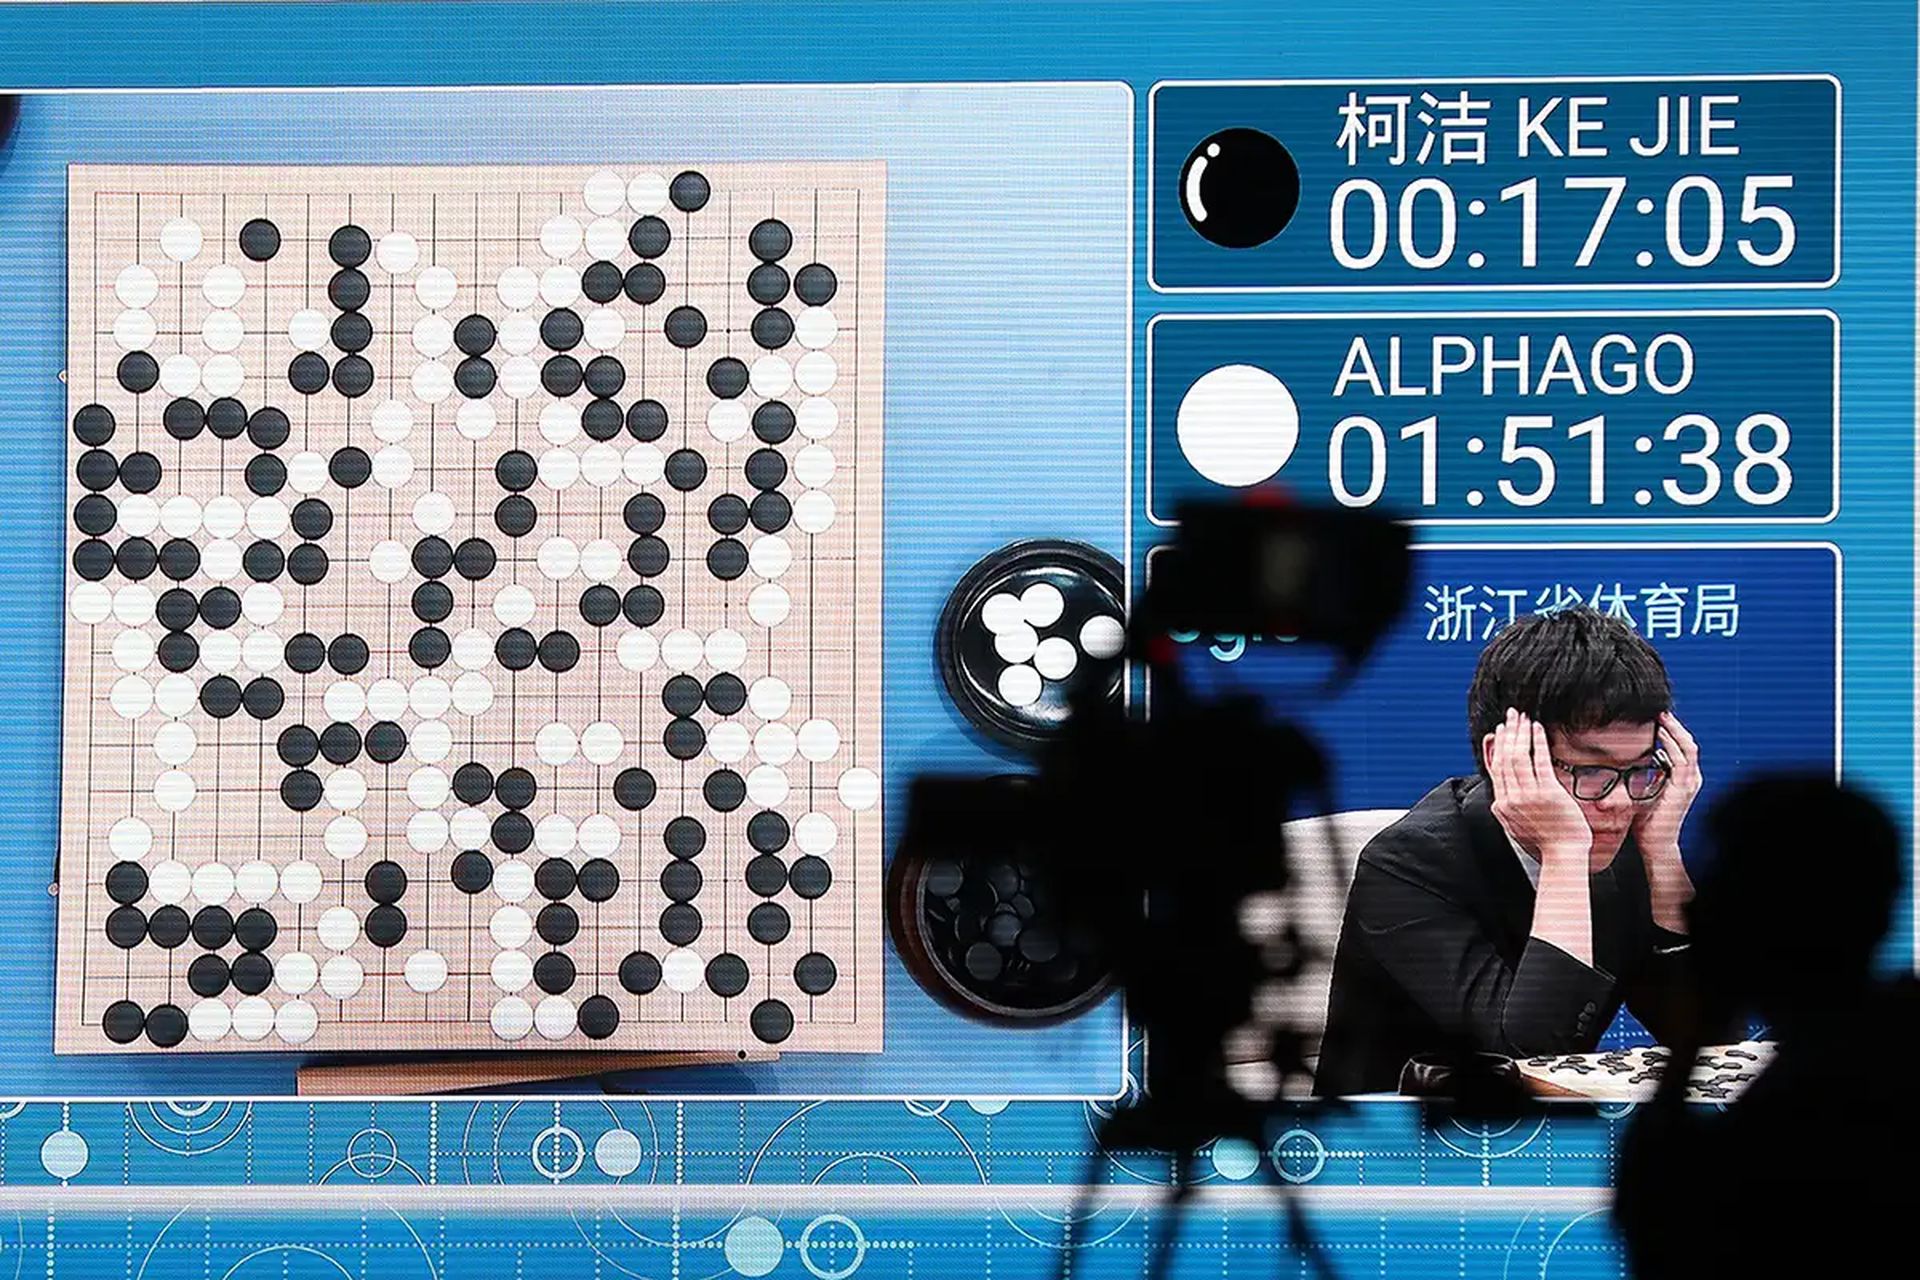 How long has AI existed: AlphaGO vs Ke Jie, May 2017